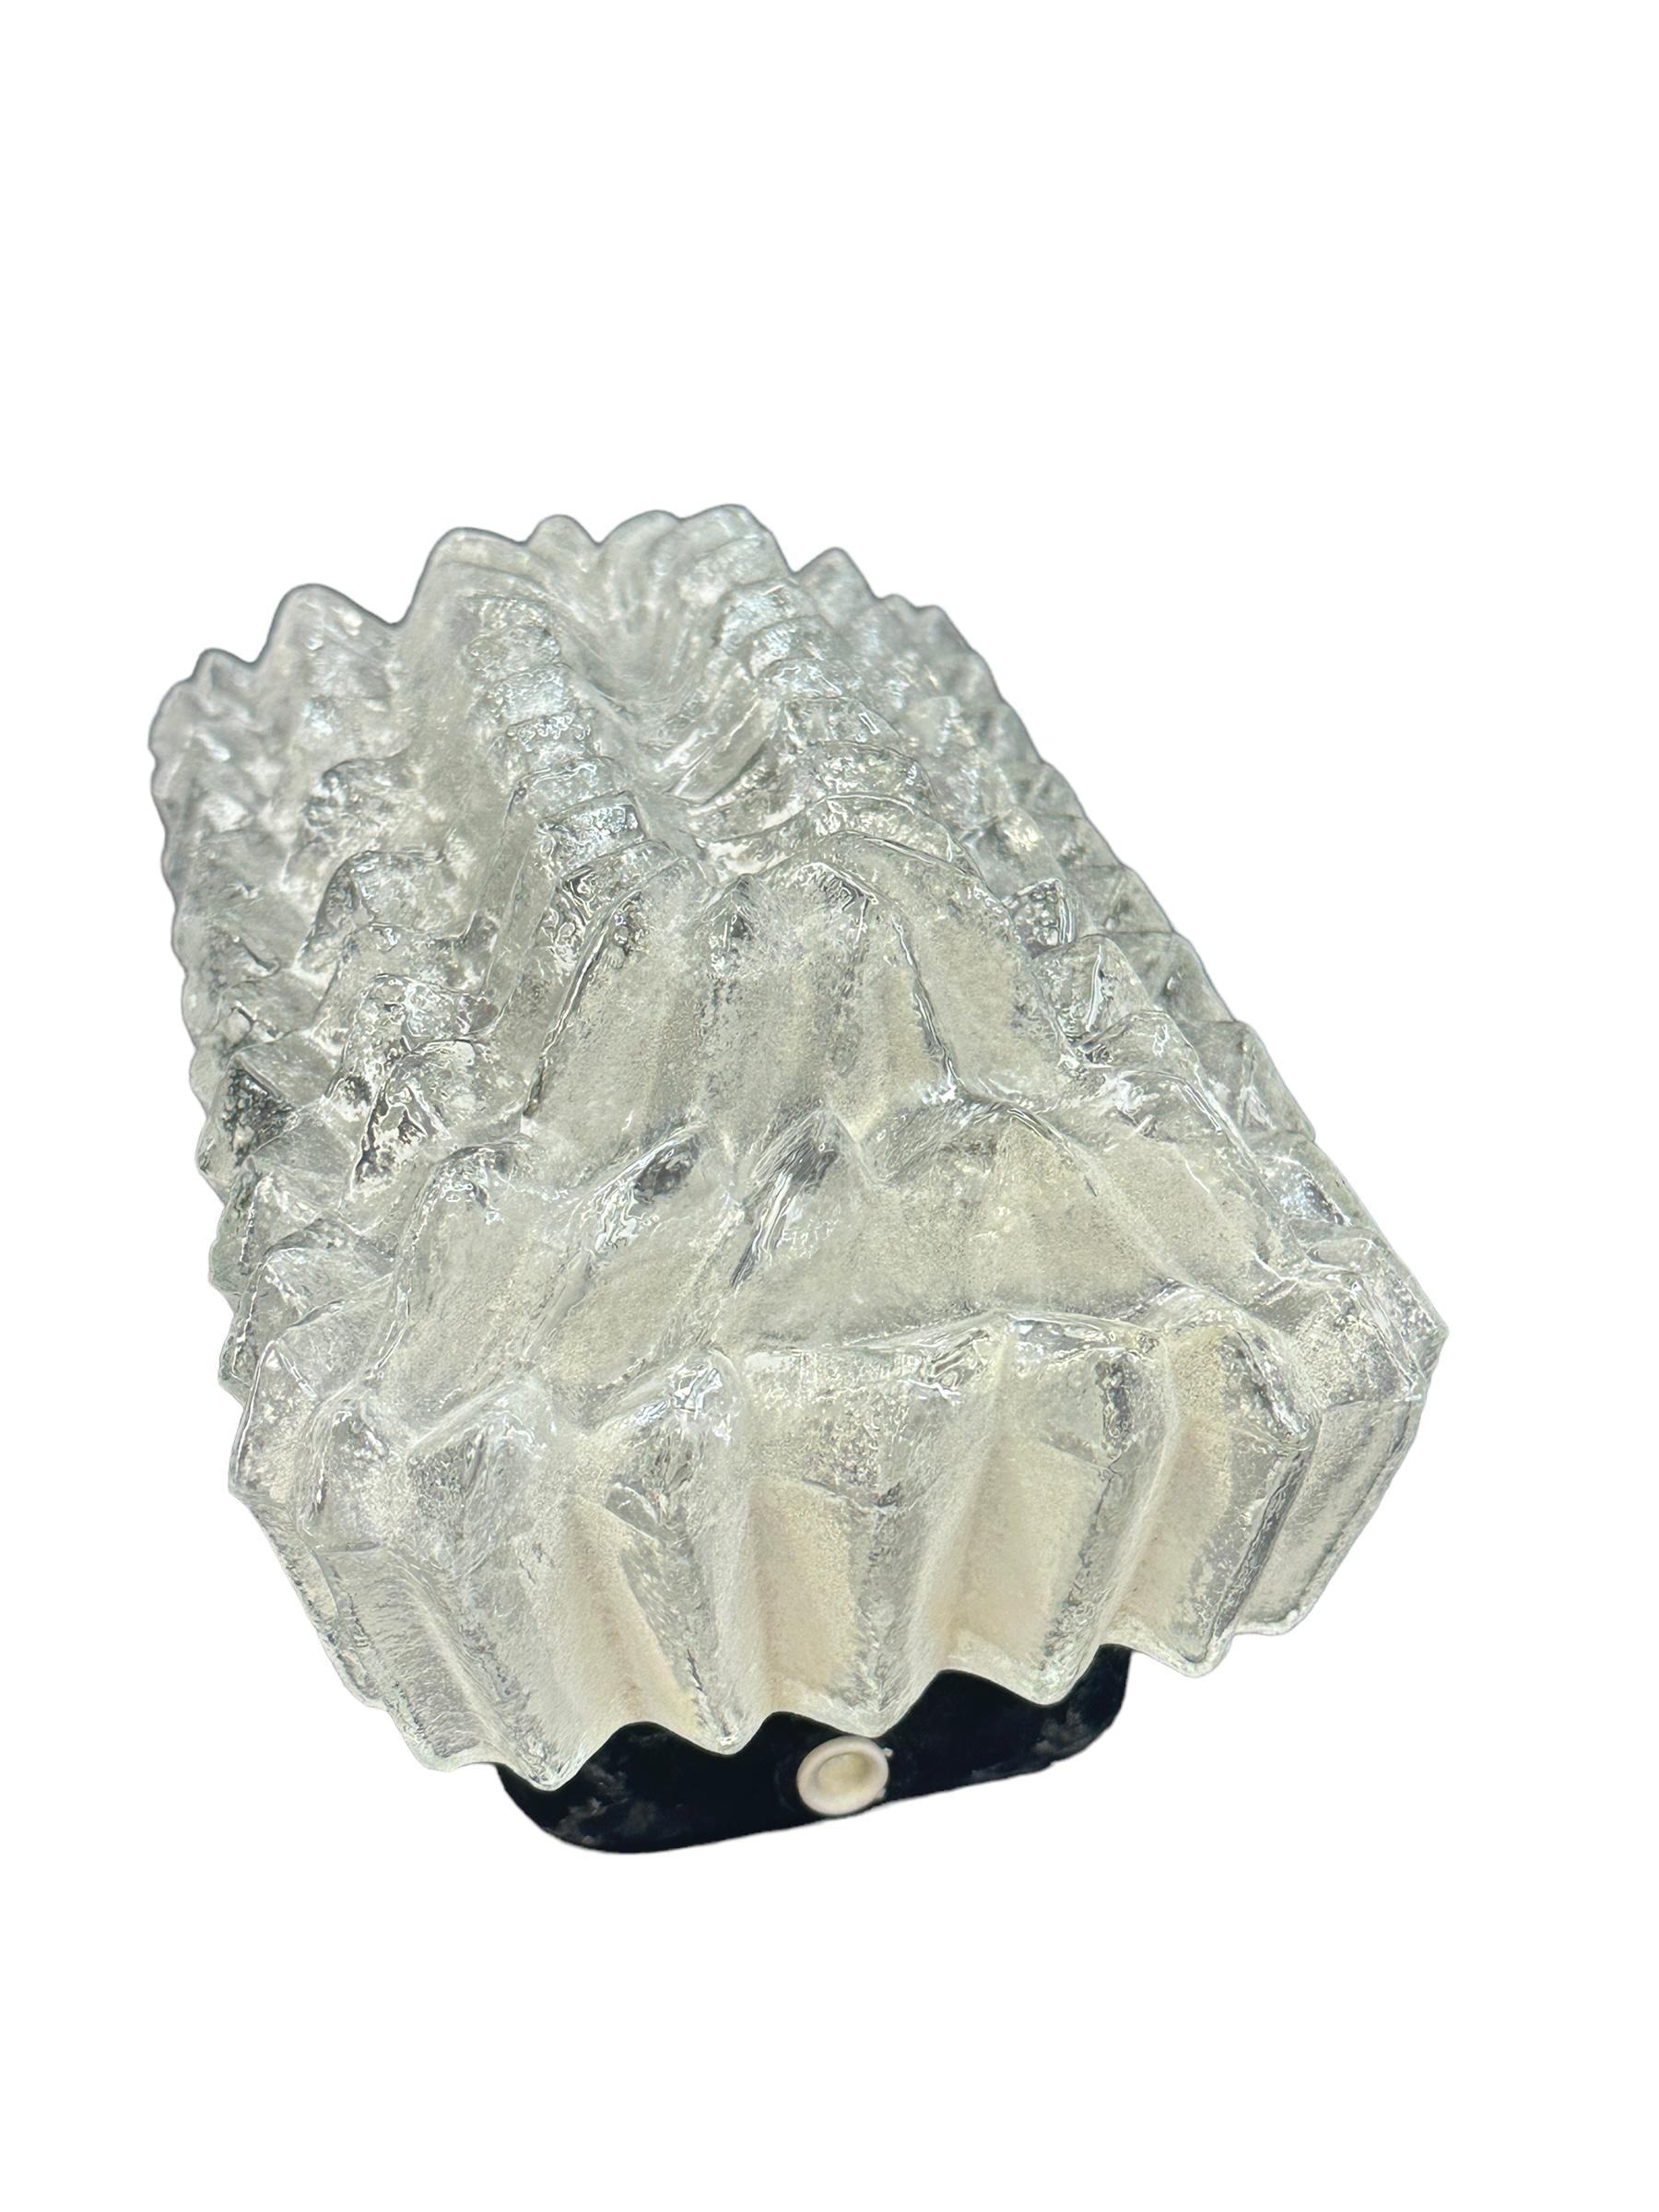 Mid-Century Modern Ice Crystal Block Glass Sconce Vintage German, 1960s RZB Leuchten For Sale